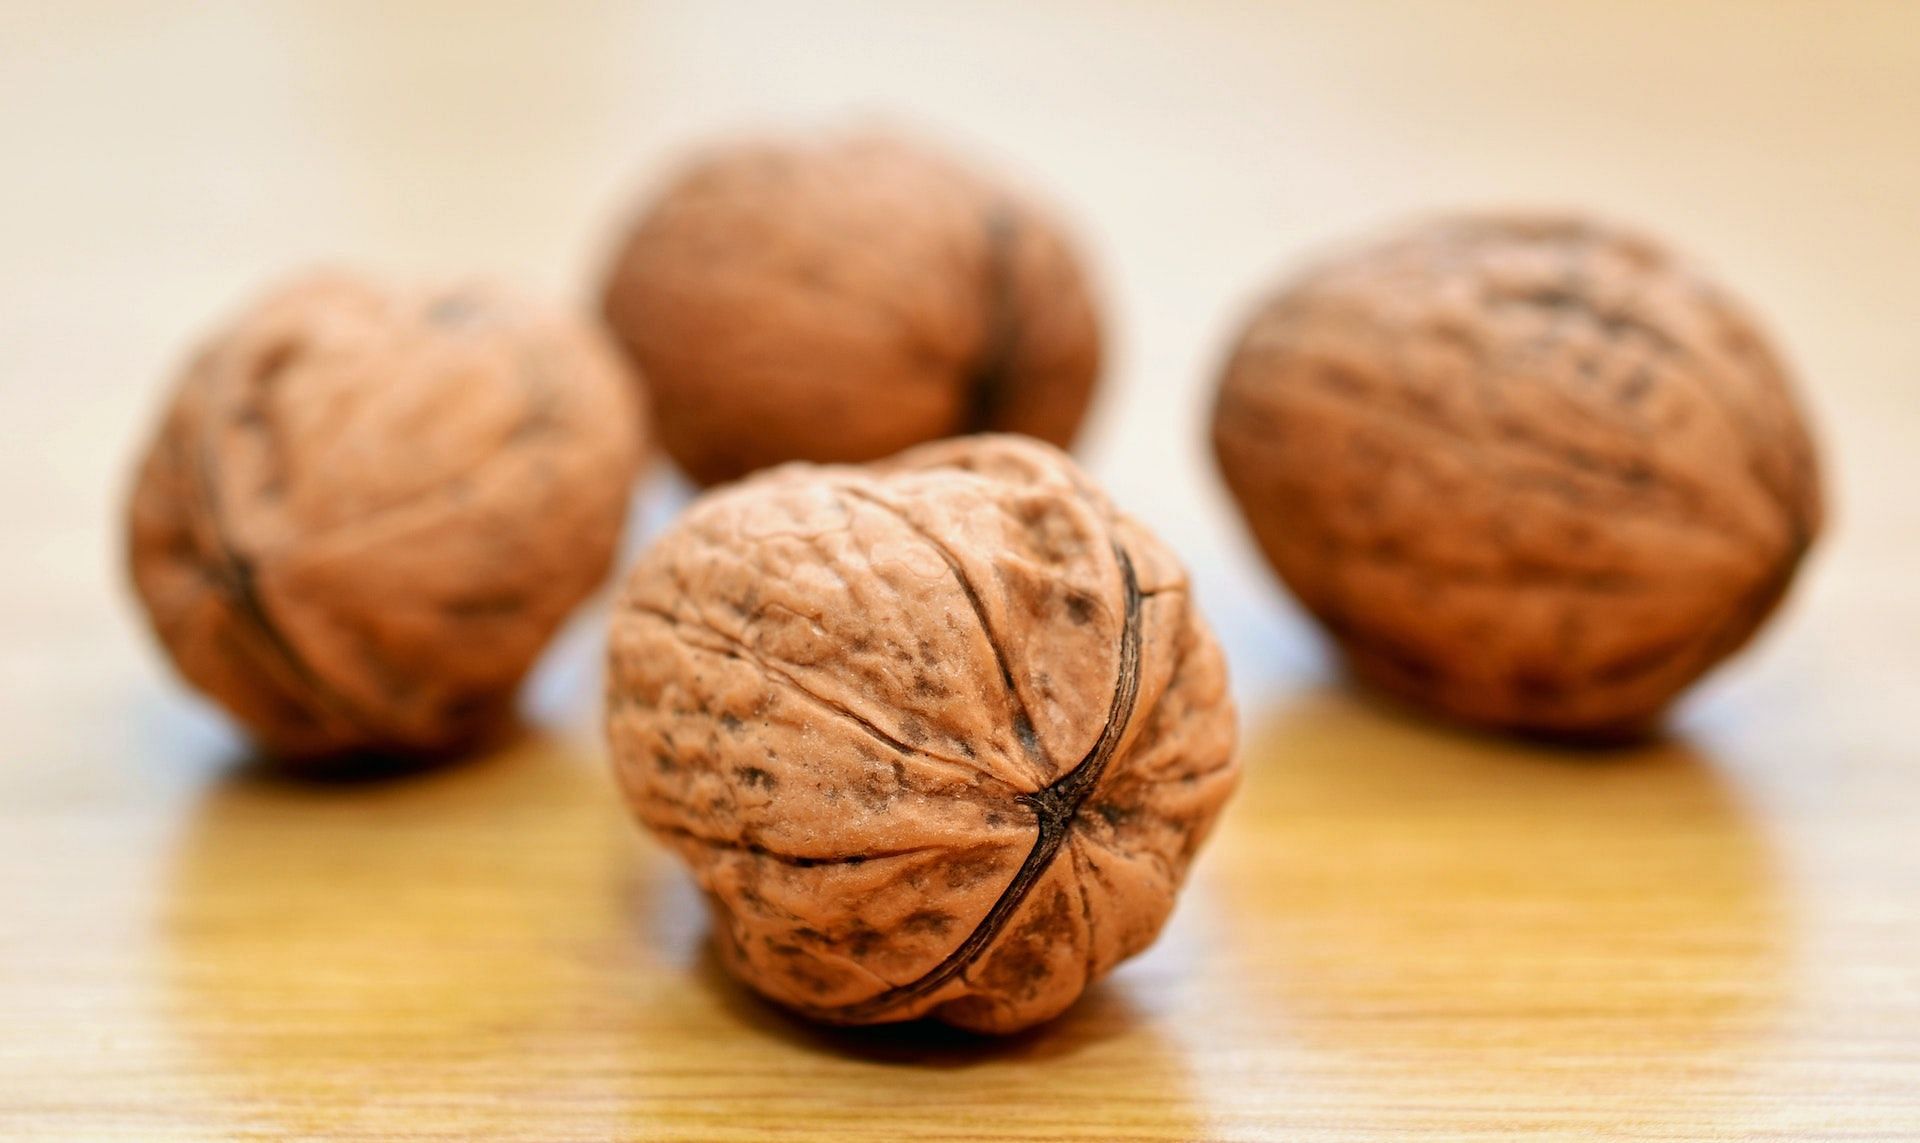 Walnuts are a good source of omega-3 fatty acids. (Photo via Pexels/Pixabay)